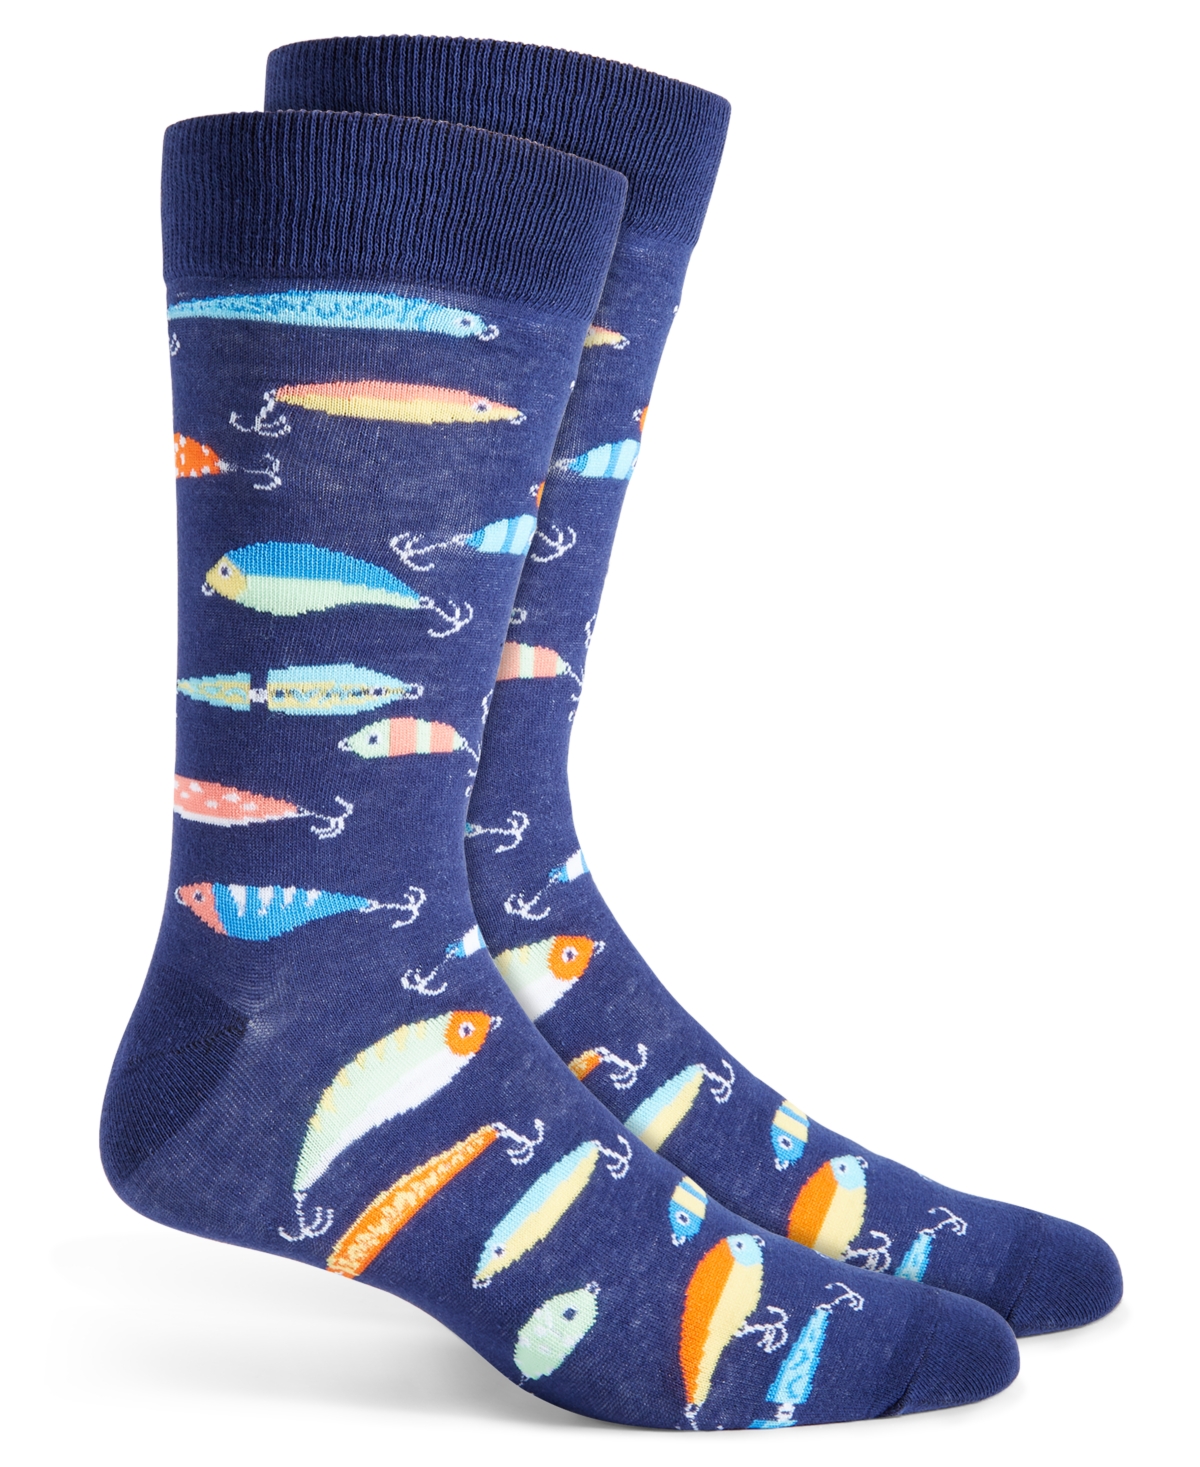 Men's Fishing Lure Crew Socks, Created for Macy's - Green